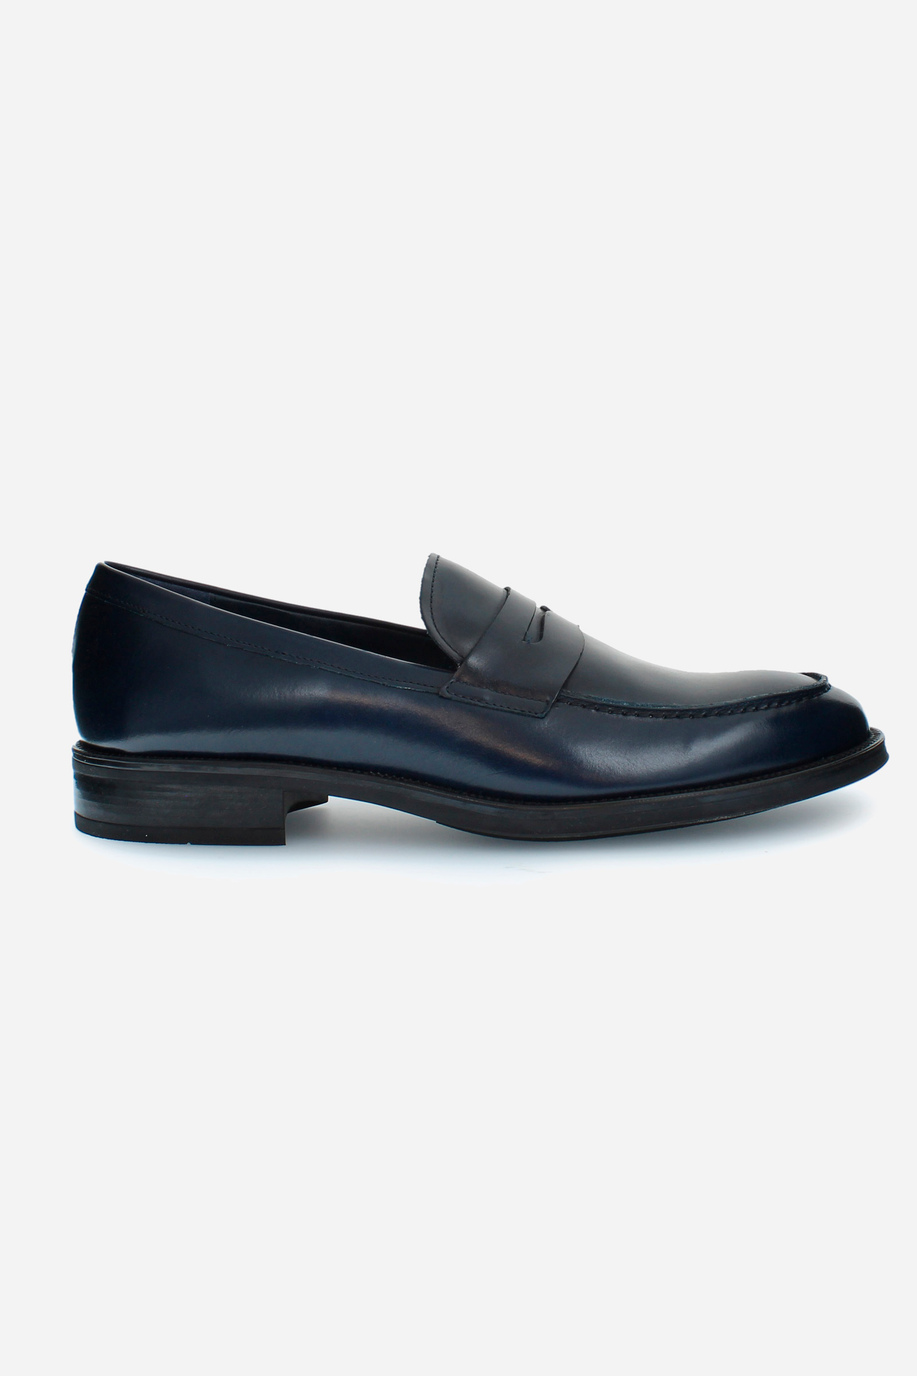 Herren-Mokassin College aus Leder - Elegante Schuhe | La Martina - Official Online Shop